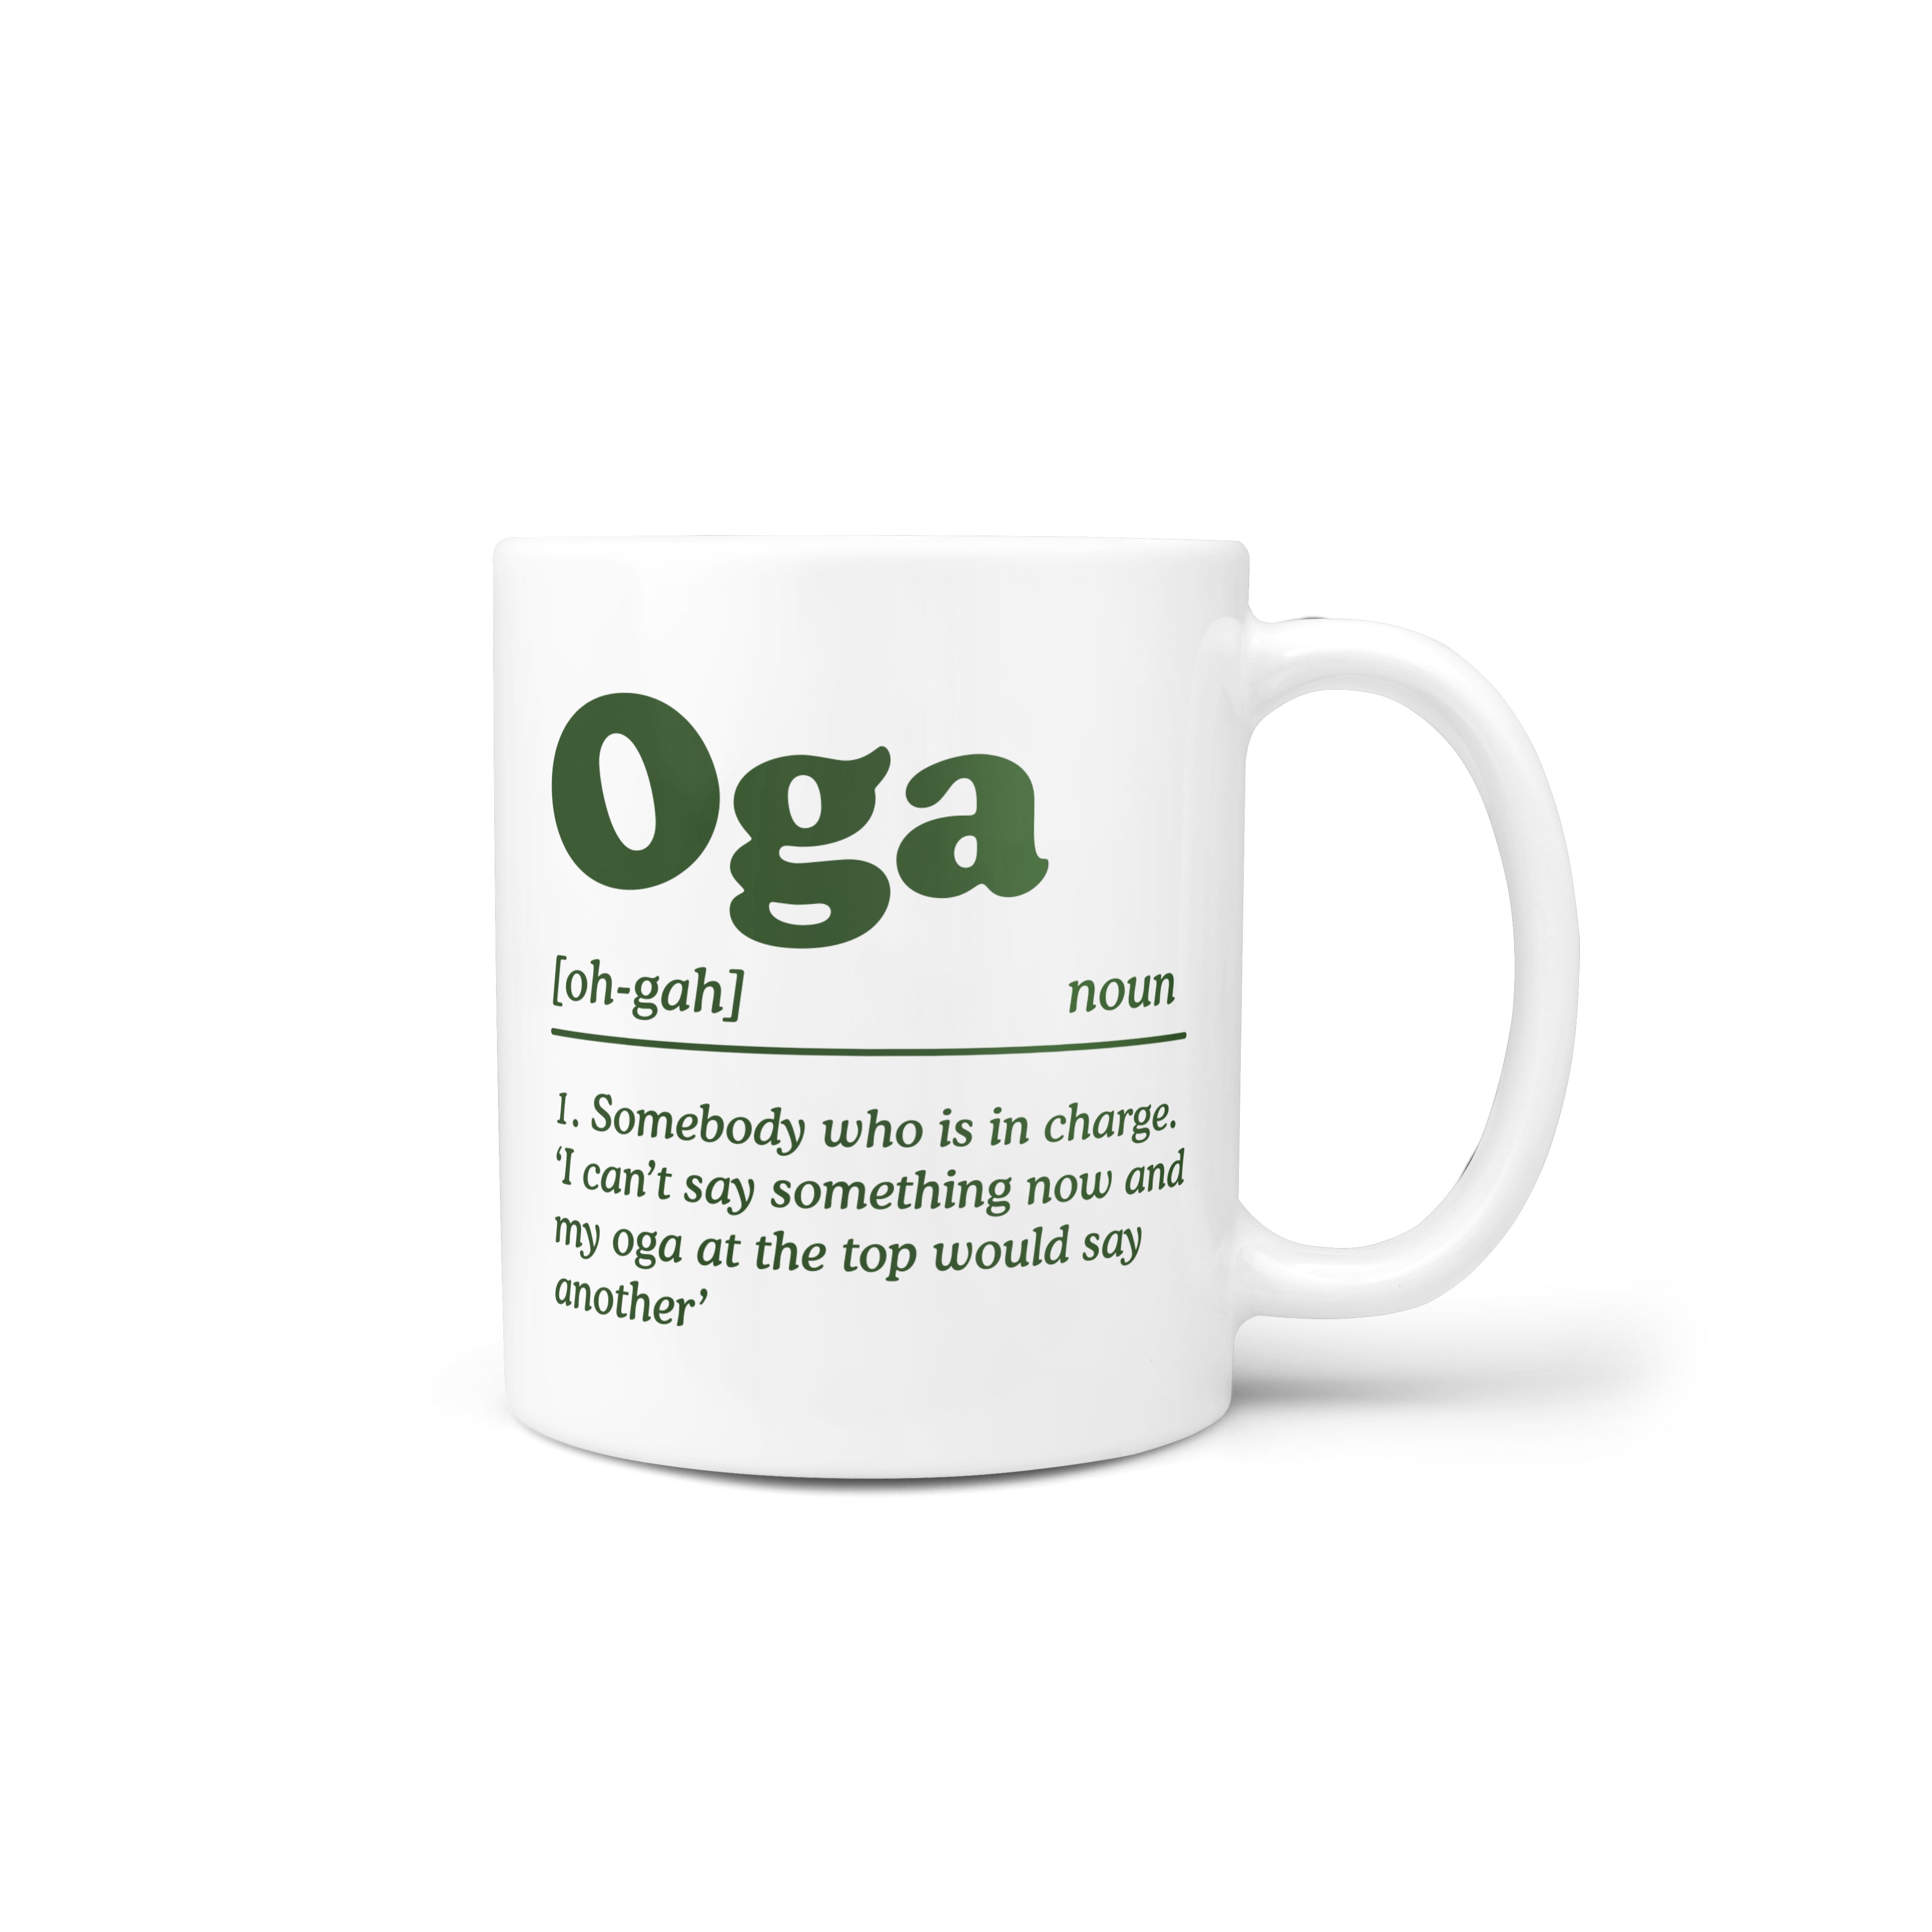 Define: Oga